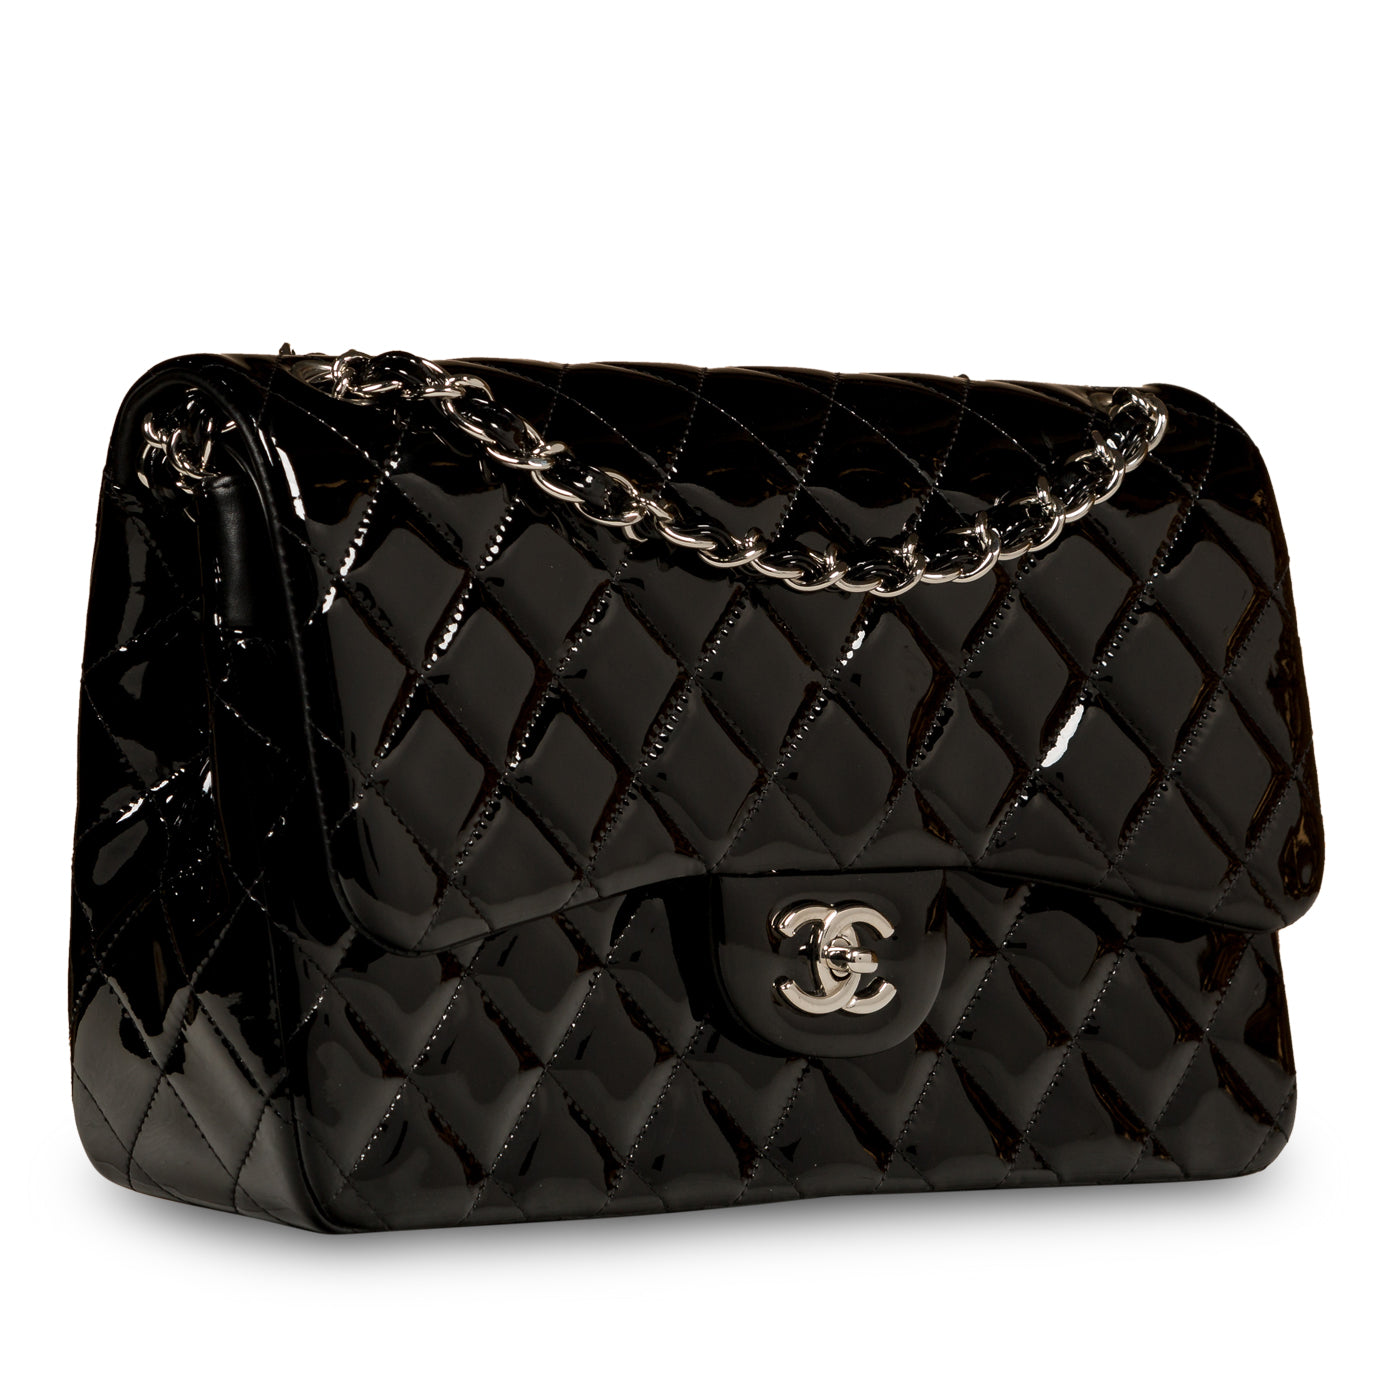 Chanel Black Patent Leather Jumbo Classic Double Flap Bag